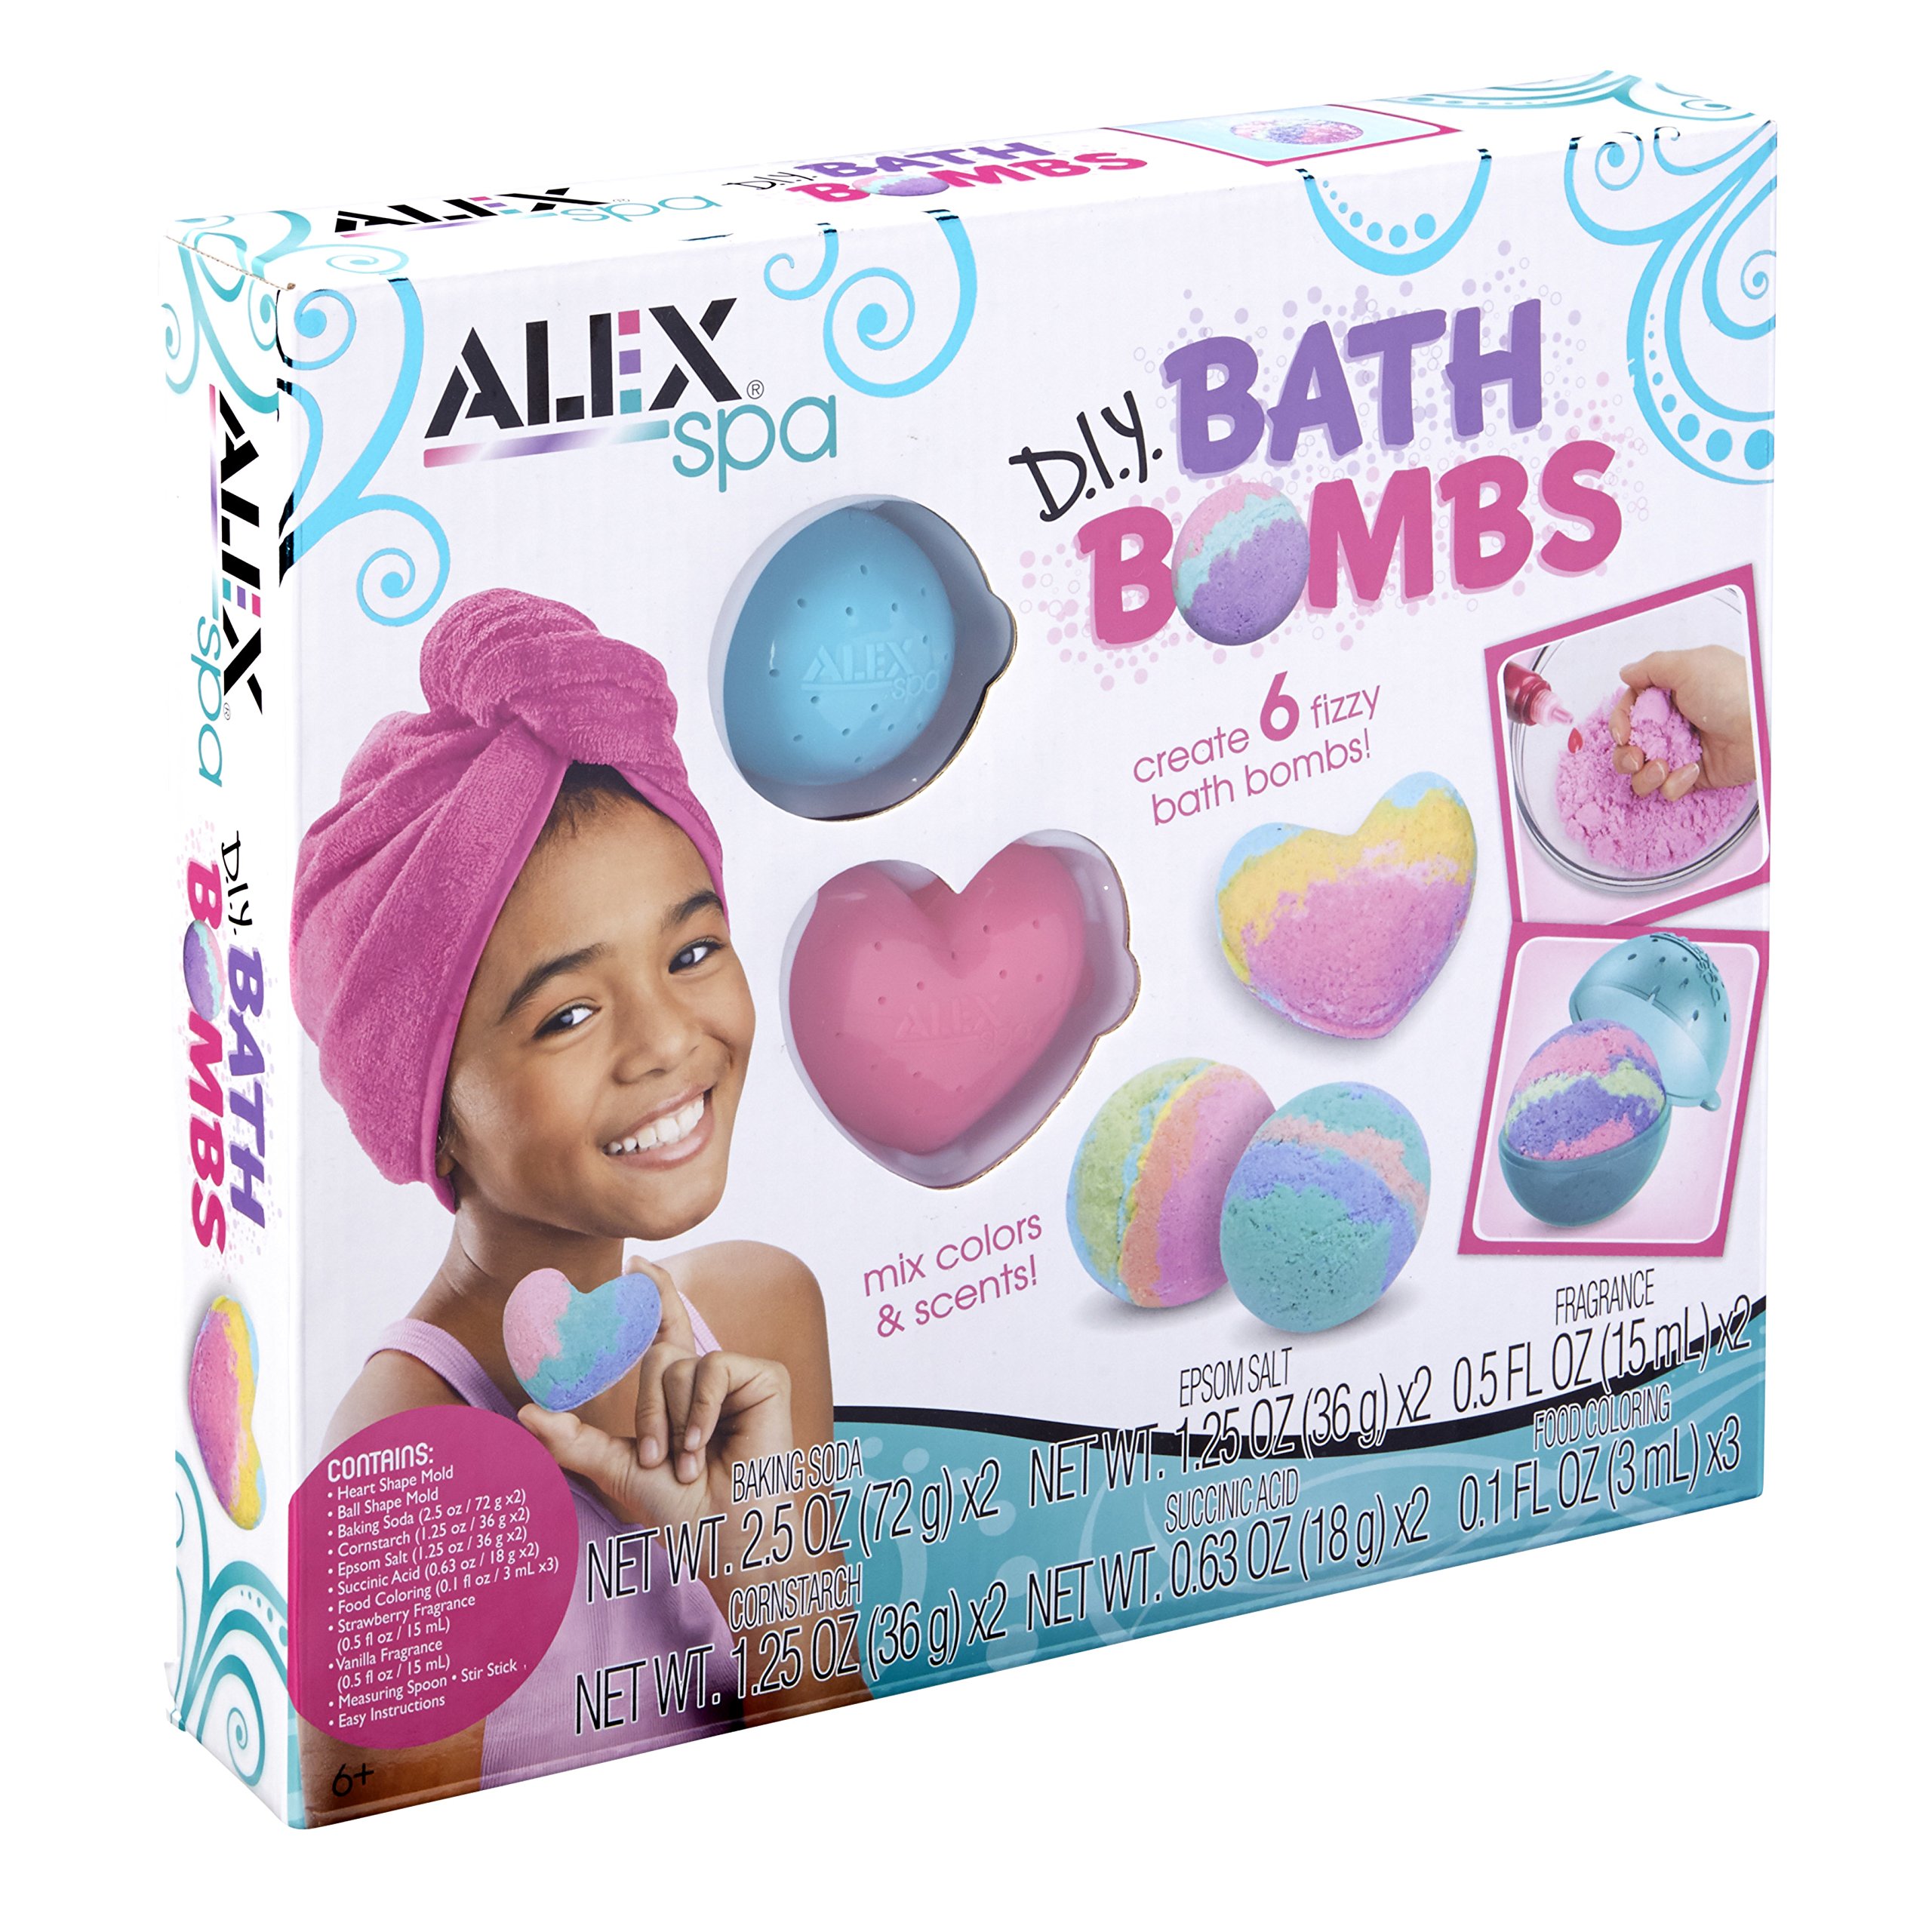 Alex Spa DIY Bath Bombs Kit Kids Bath Bomb Soap Kit